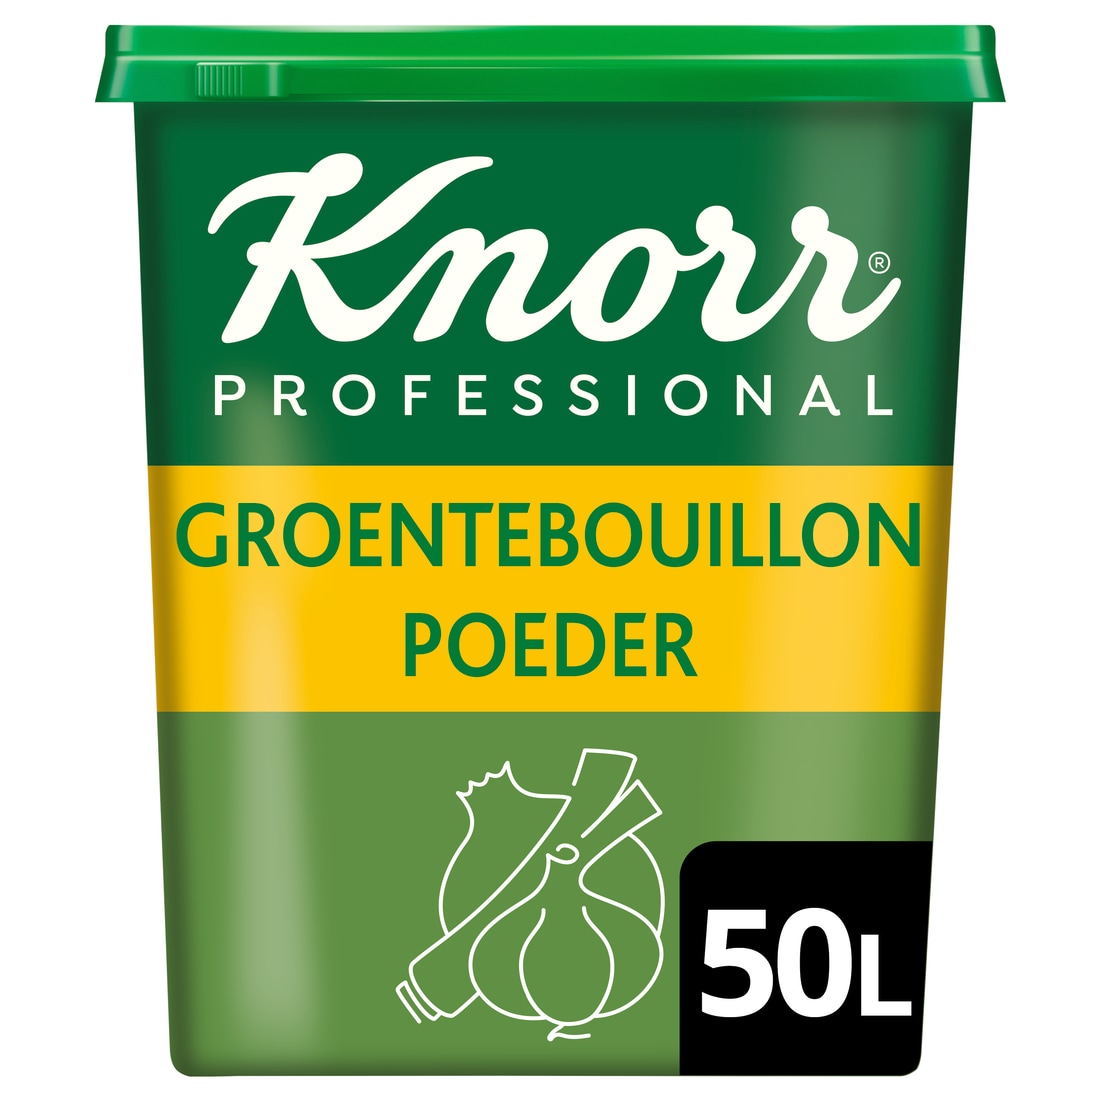 Spaar voor Knorr 1-2-3 Groentebouillon krachtige smaak Poeder opbrengst 50L - 